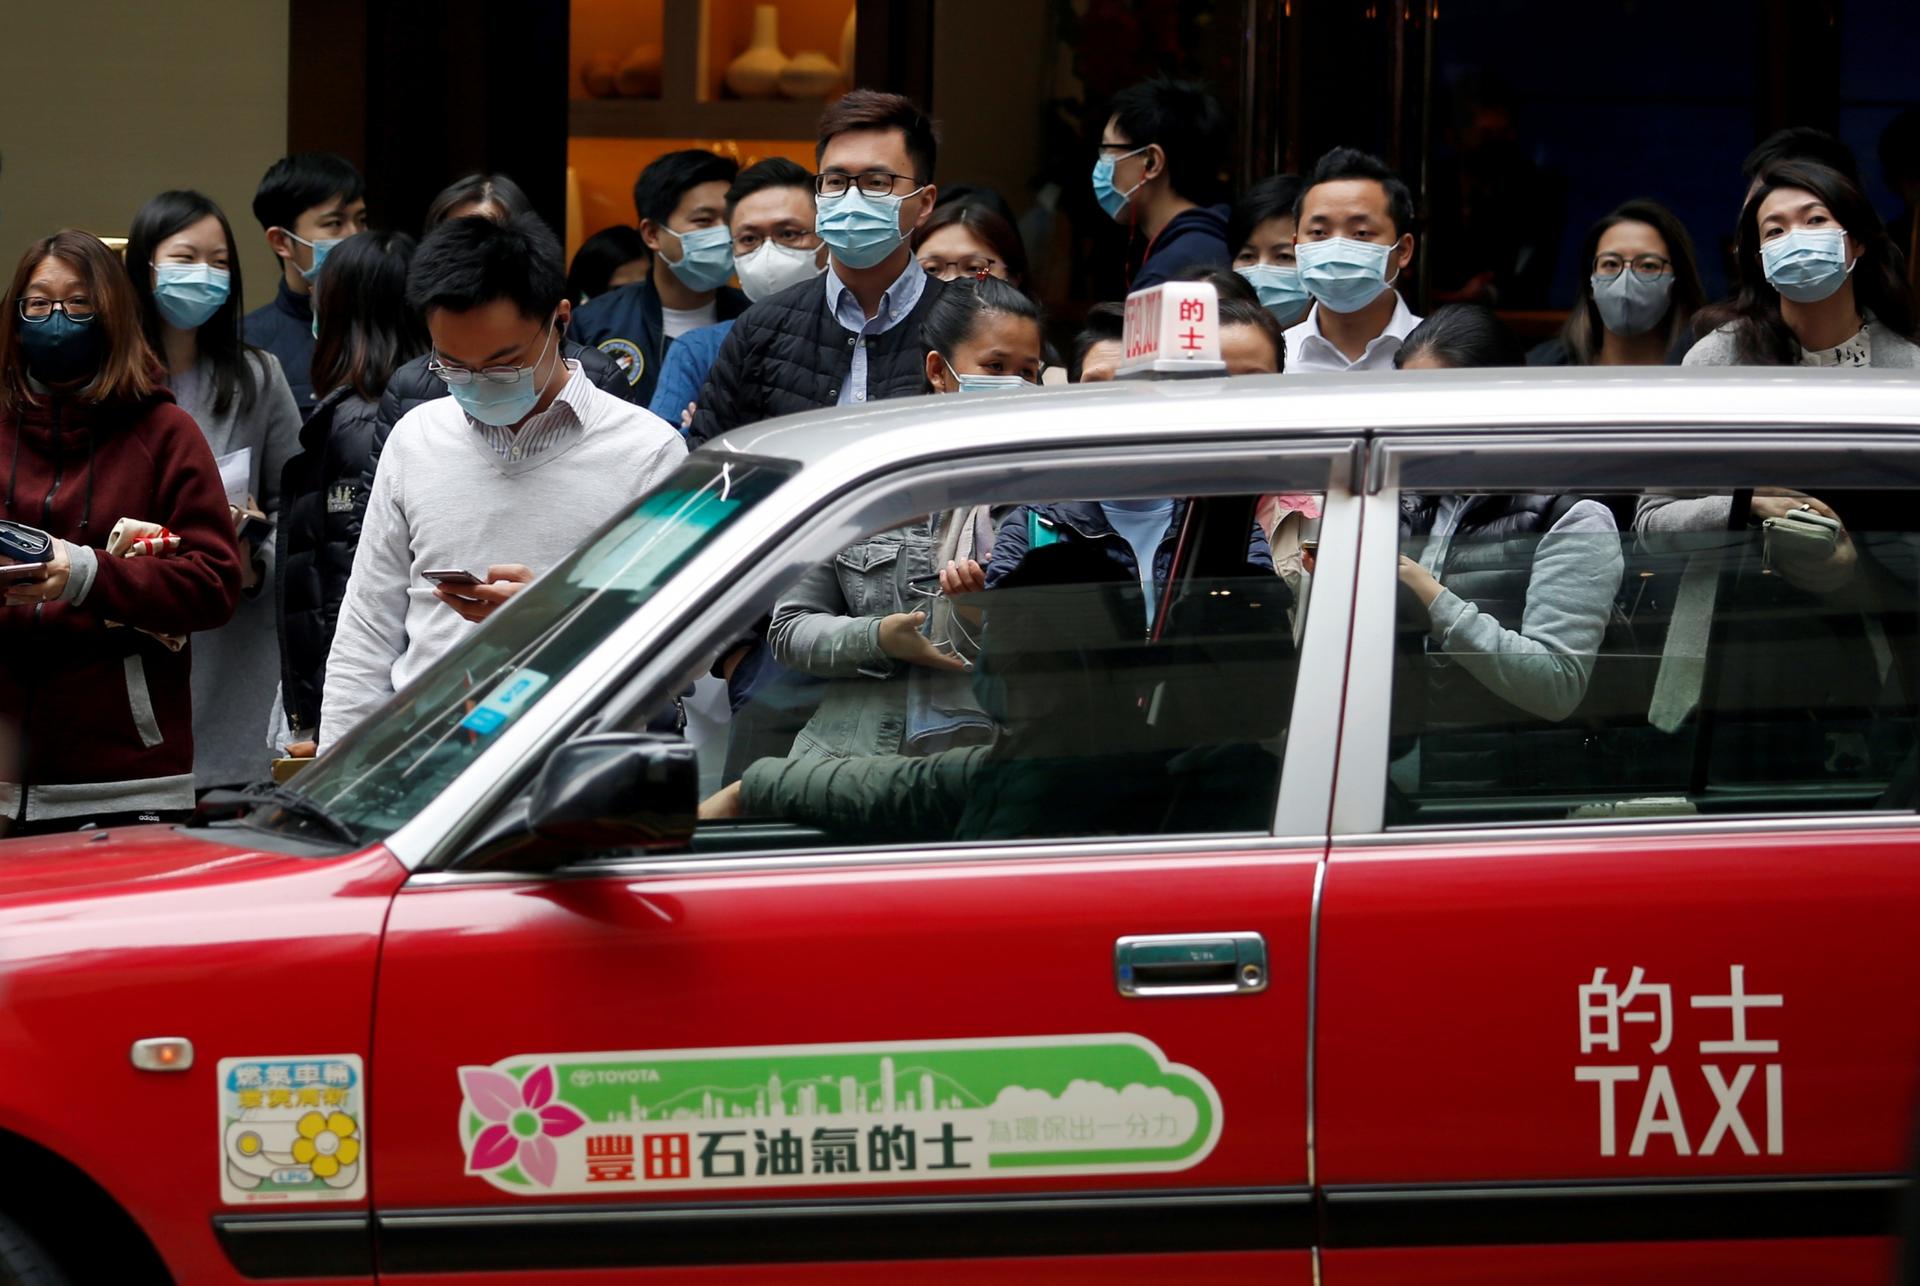 People wear masks on crowded street in Hong Kong